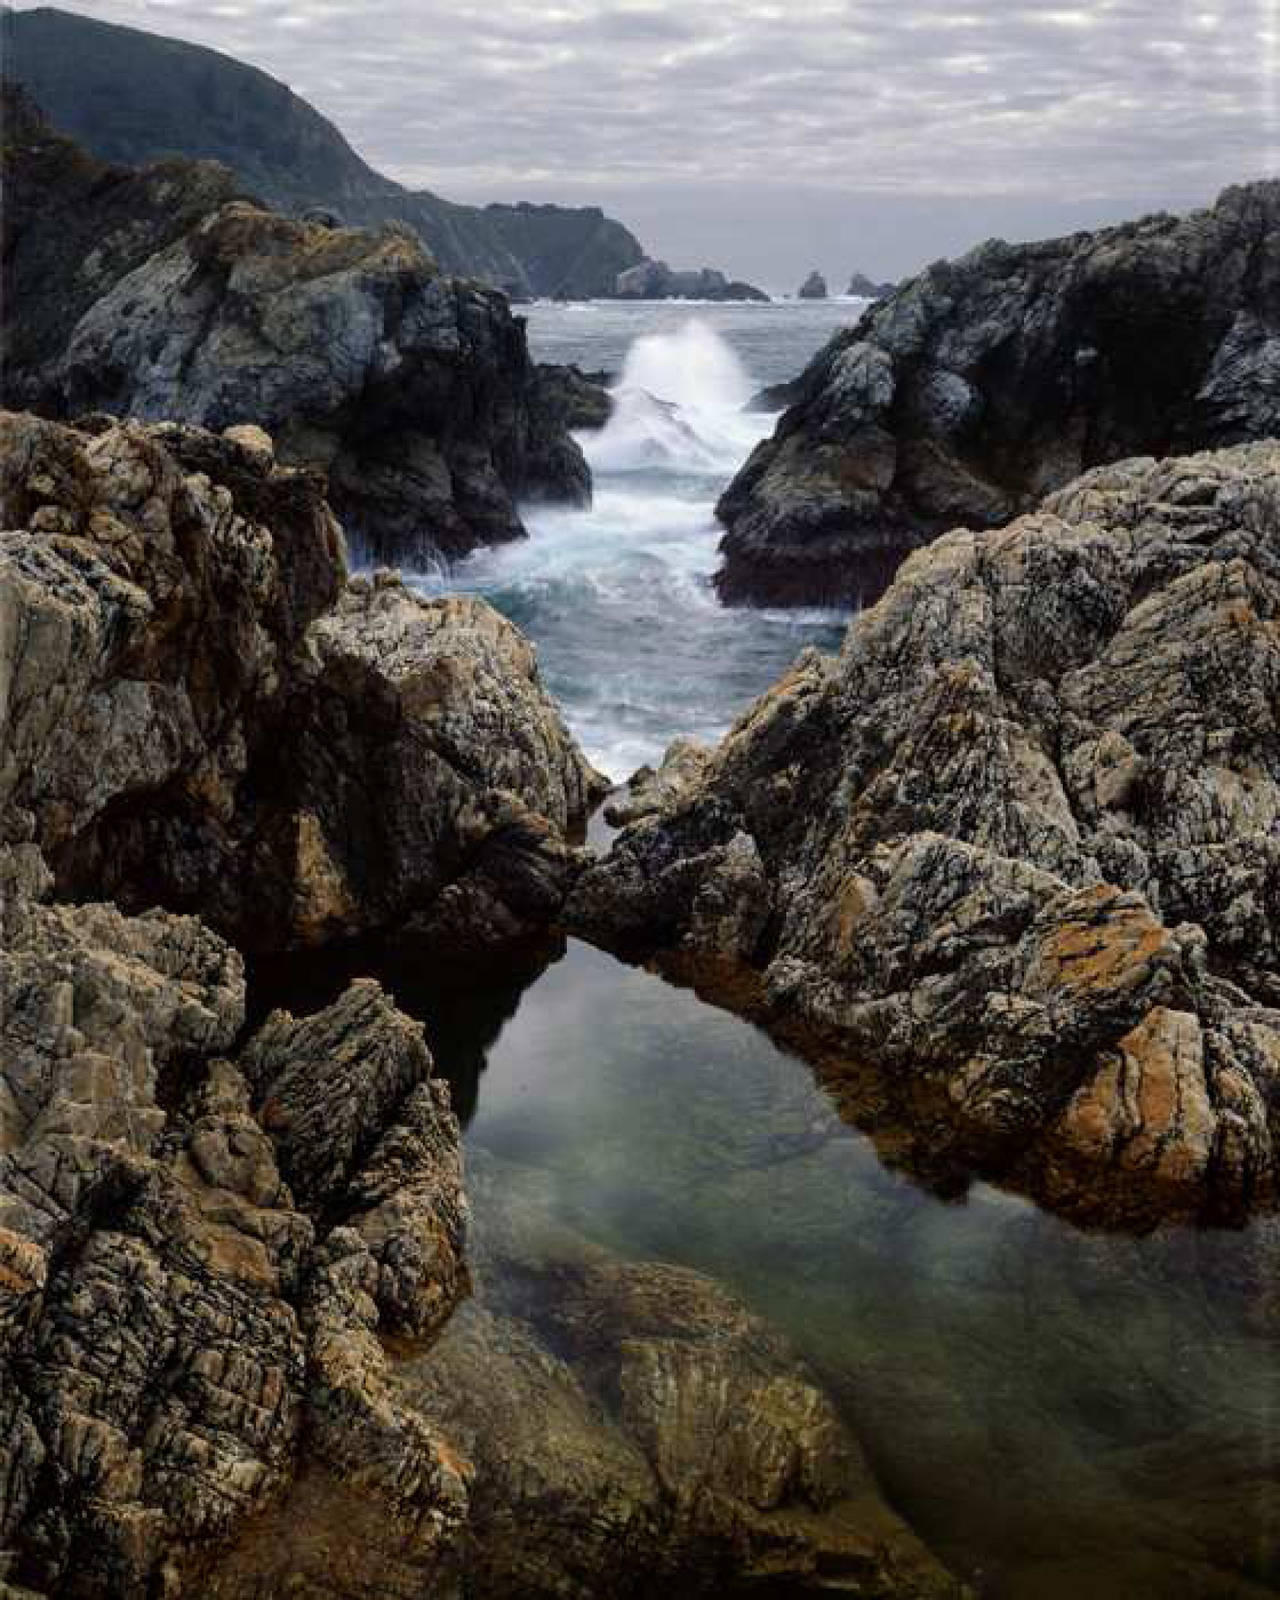 Kenneth Parker Landscape Photograph - Pool Spray and Sea, Big Sur, CA